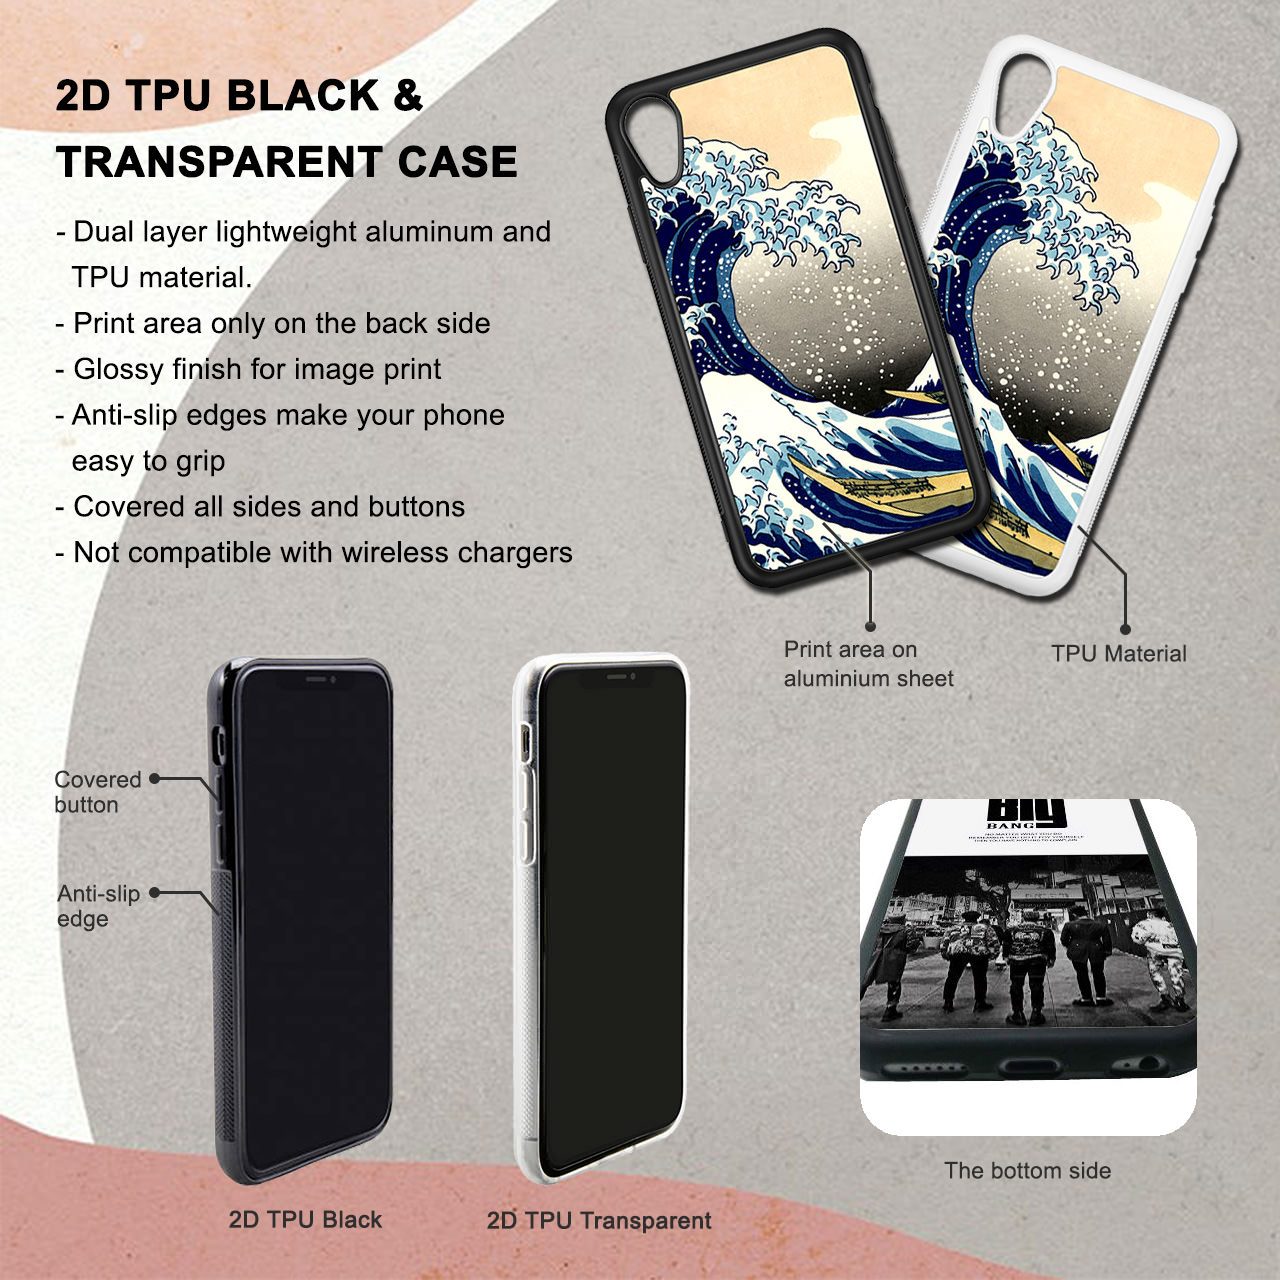 Zamasu Dragon Ball iPhone 11 Pro Case